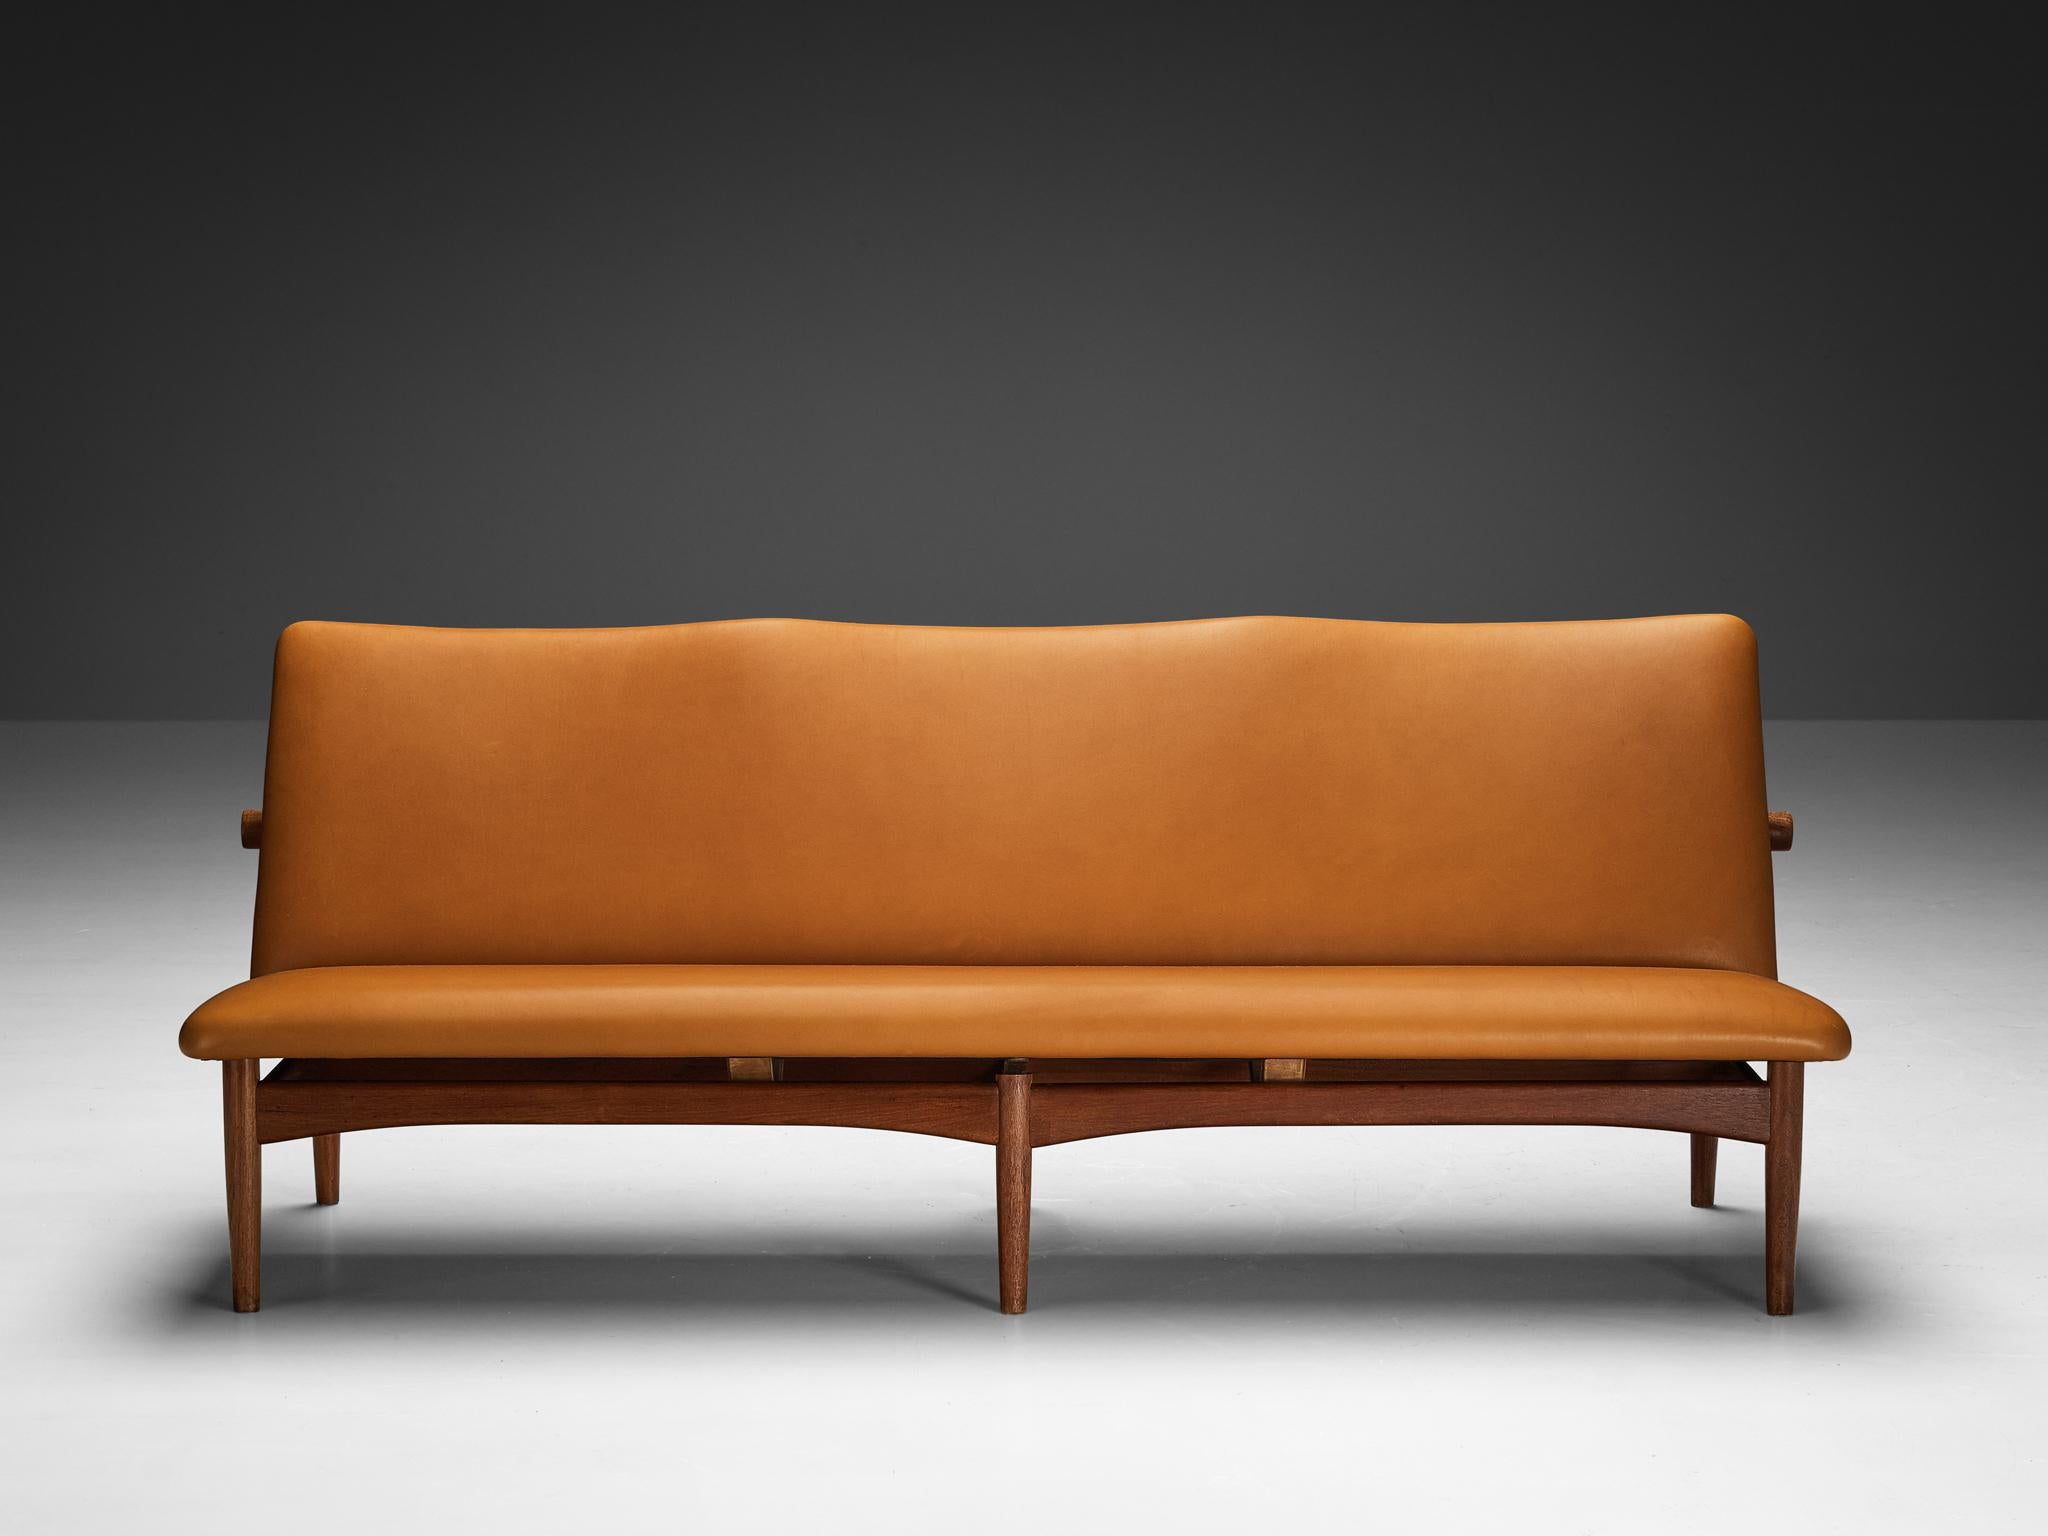 Scandinavian Modern Finn Juhl for France & Søn ‘Japan’ Sofa in Teak and Cognac Leather  For Sale